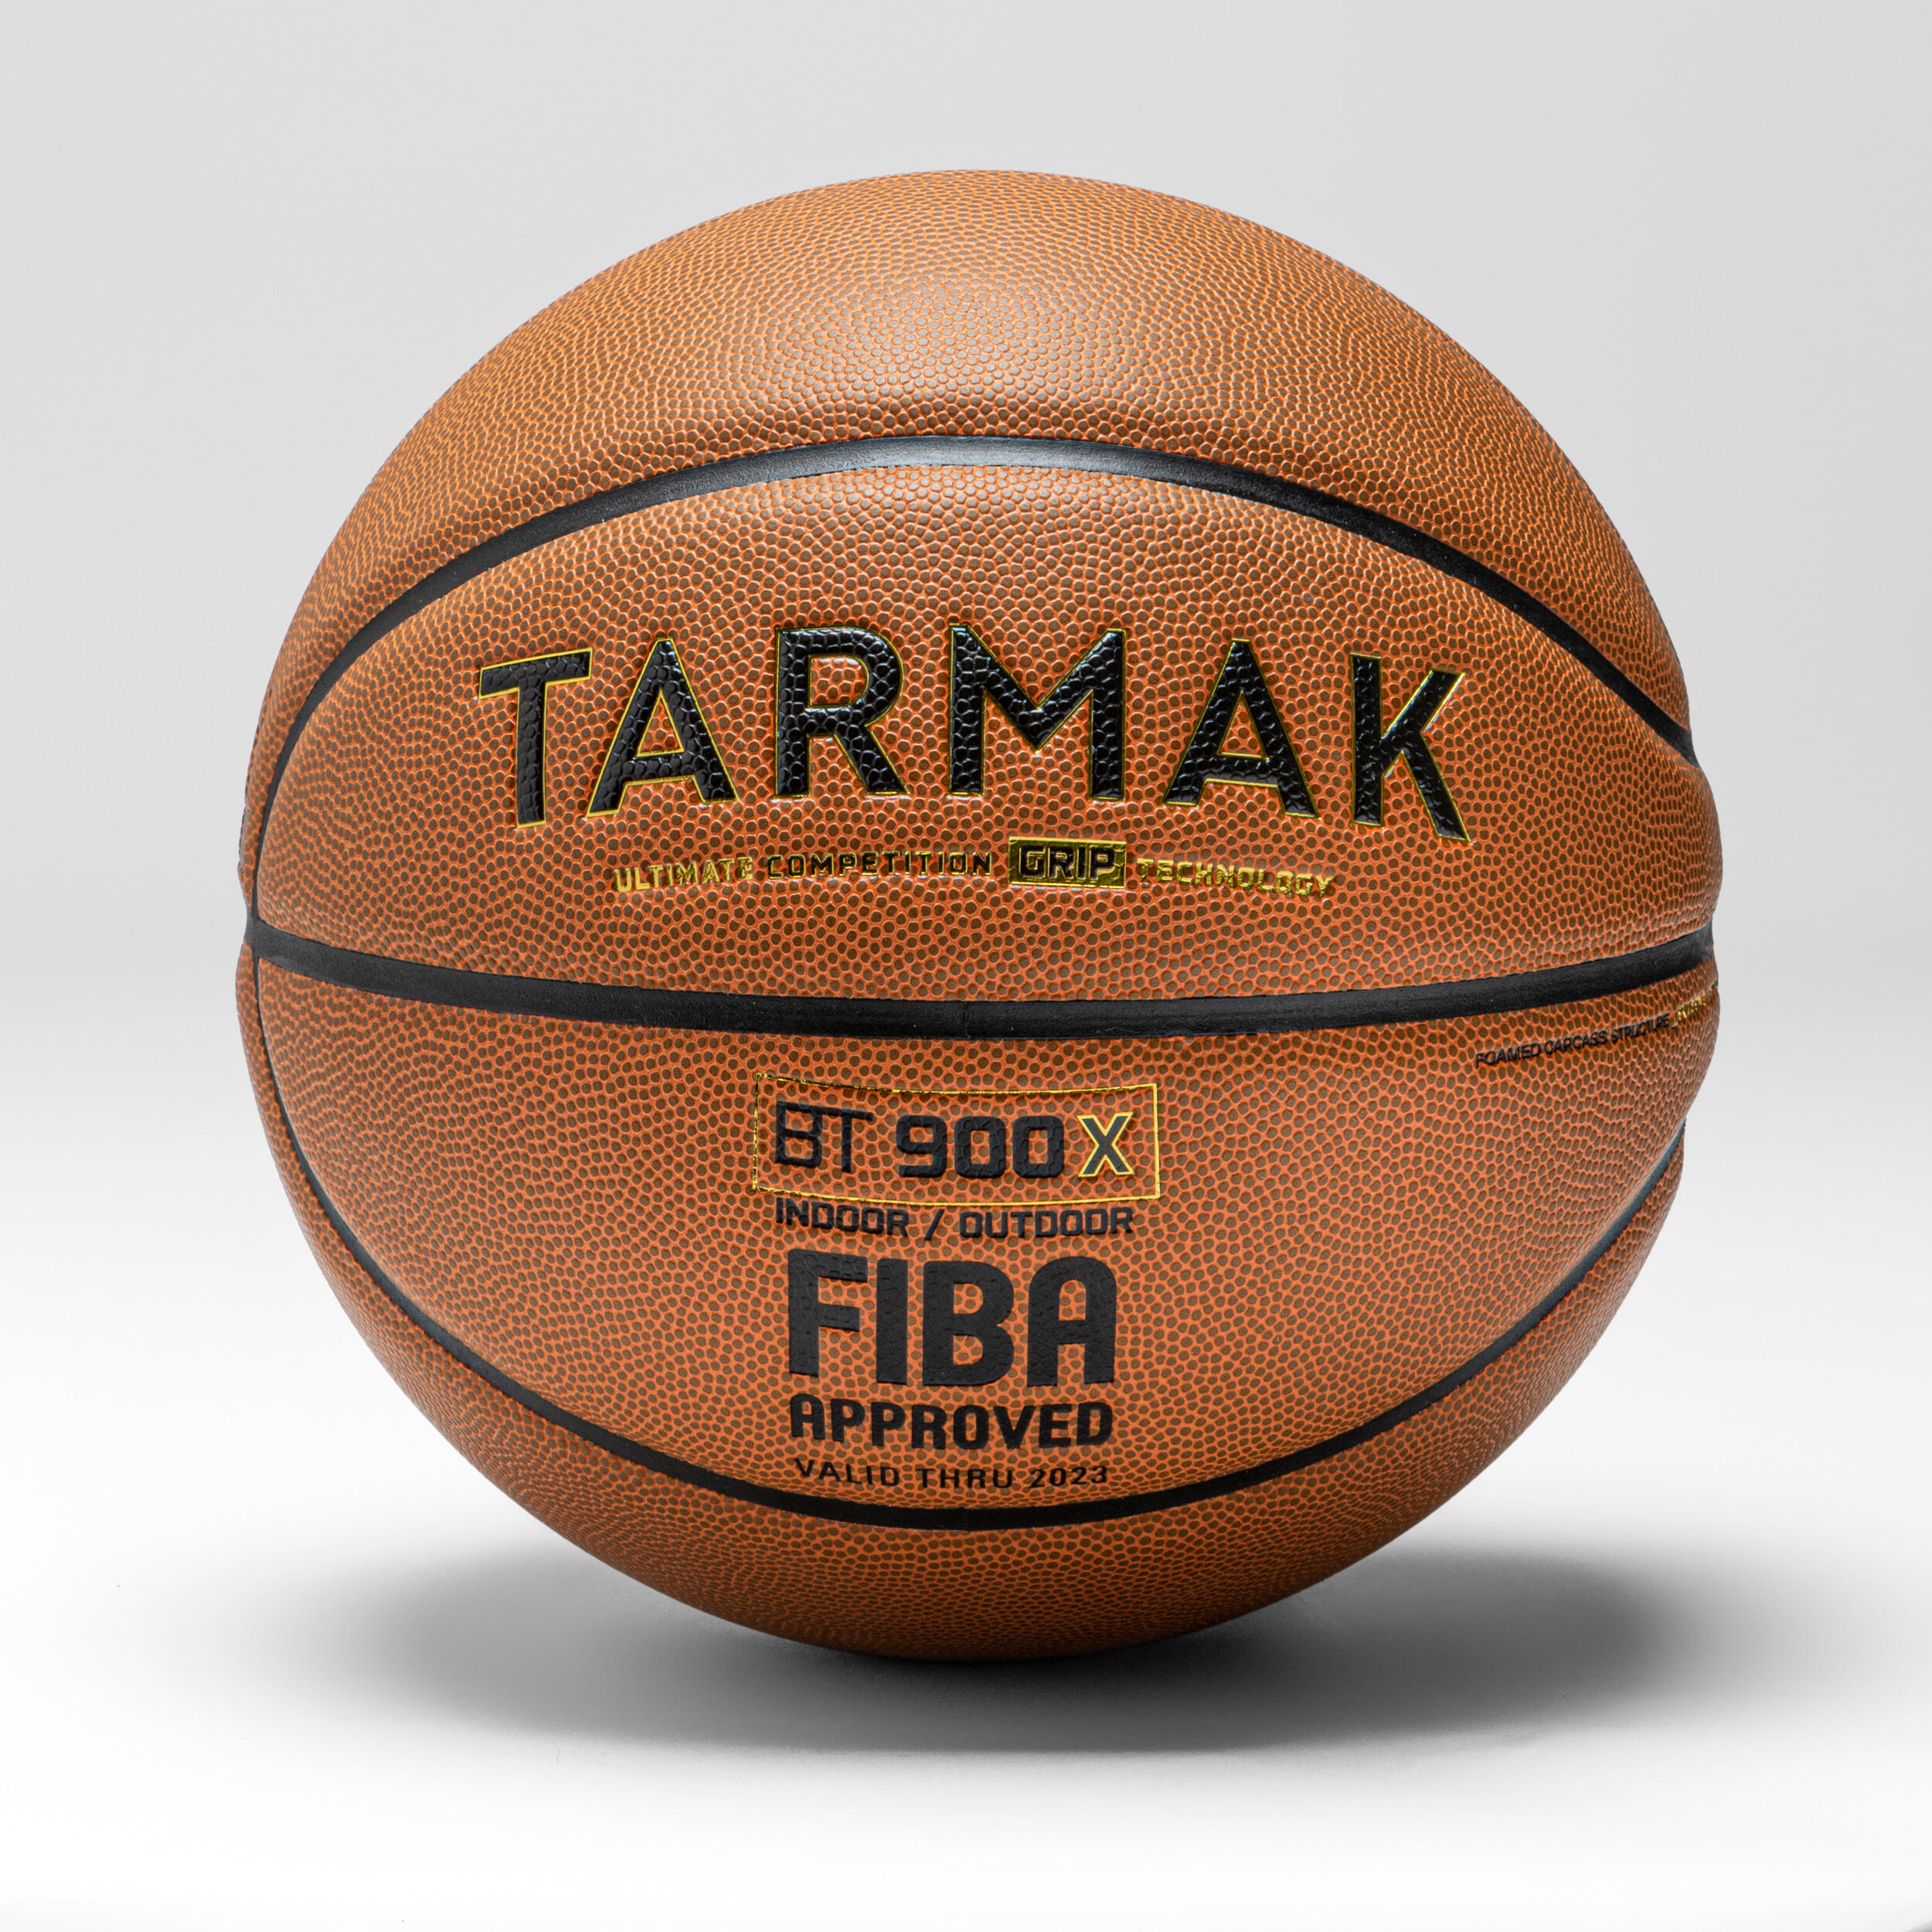 Size 7 FIBA Basketball BT900 Grip Touch - Orange 1/6